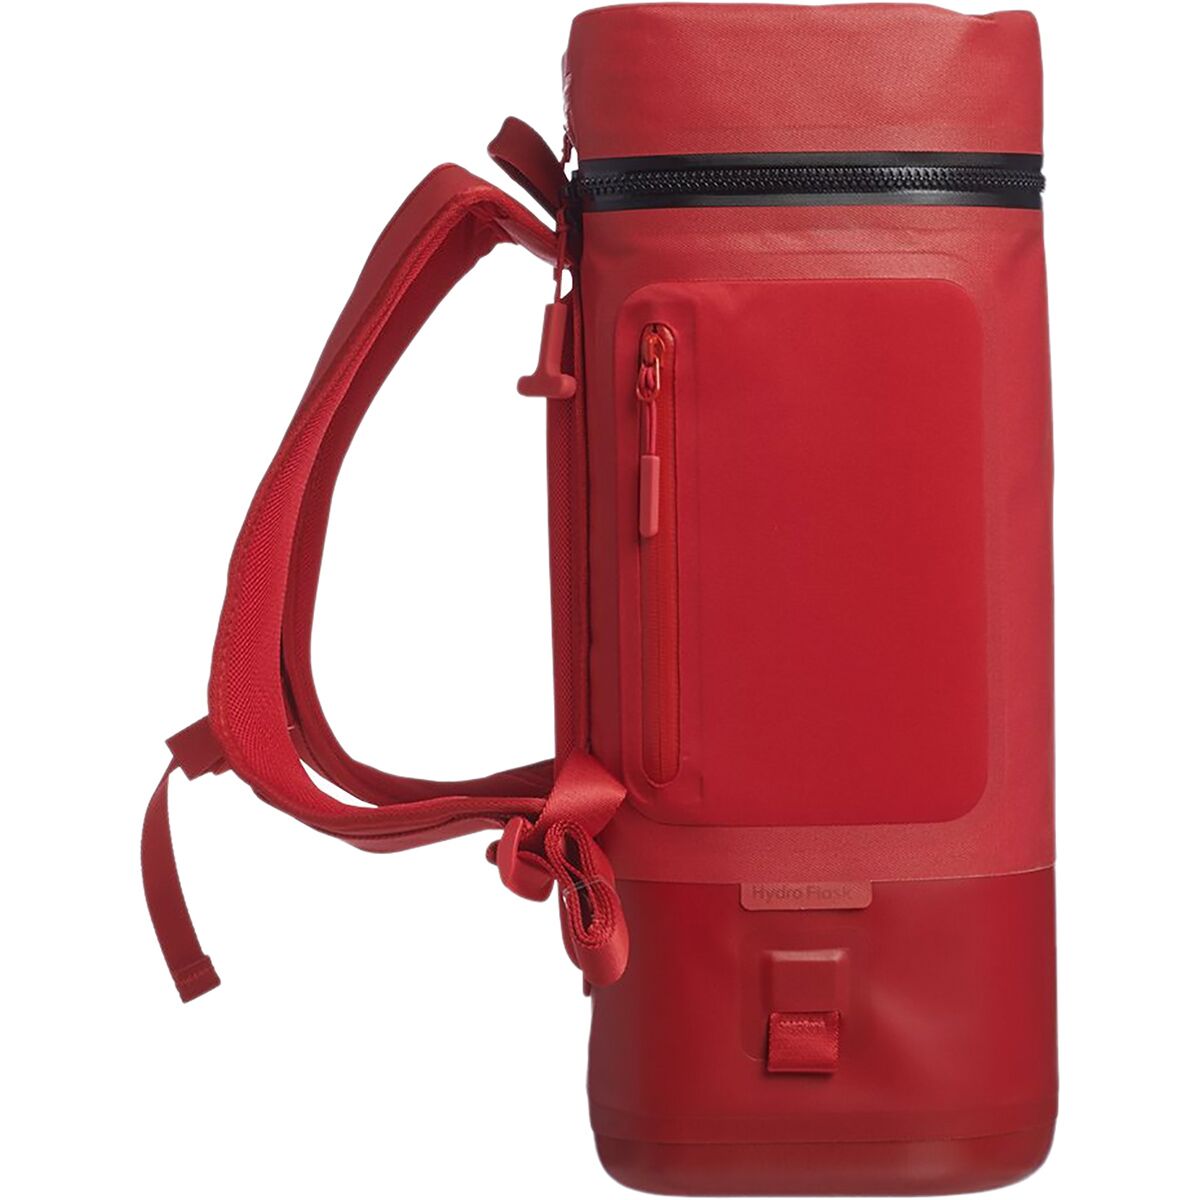 Hydro Flask Unbound 22L Soft Cooler Pack